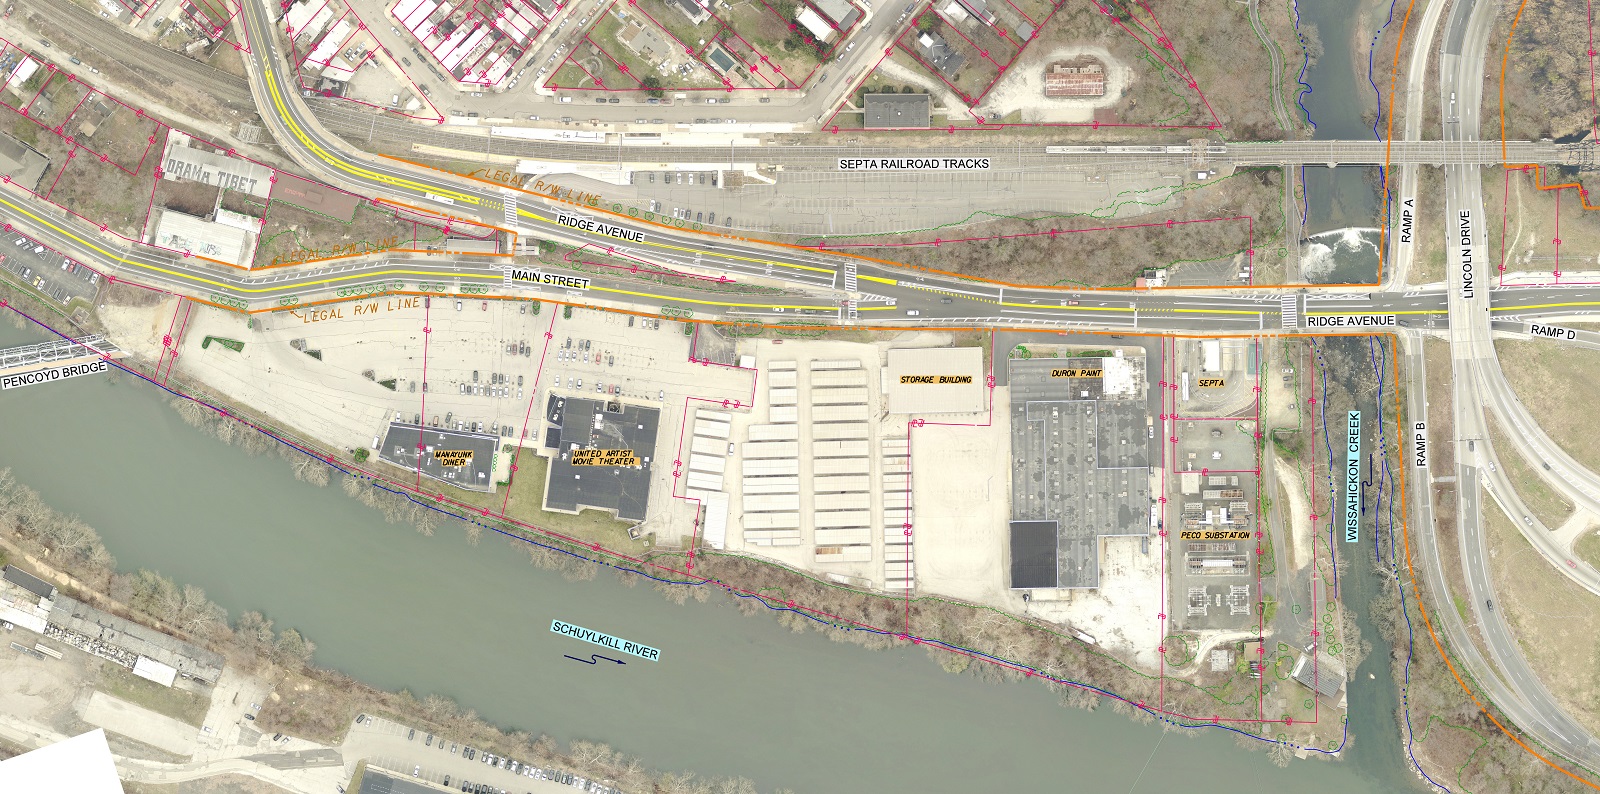 Satellite image showing the existing Wissahickon Transportation Center site